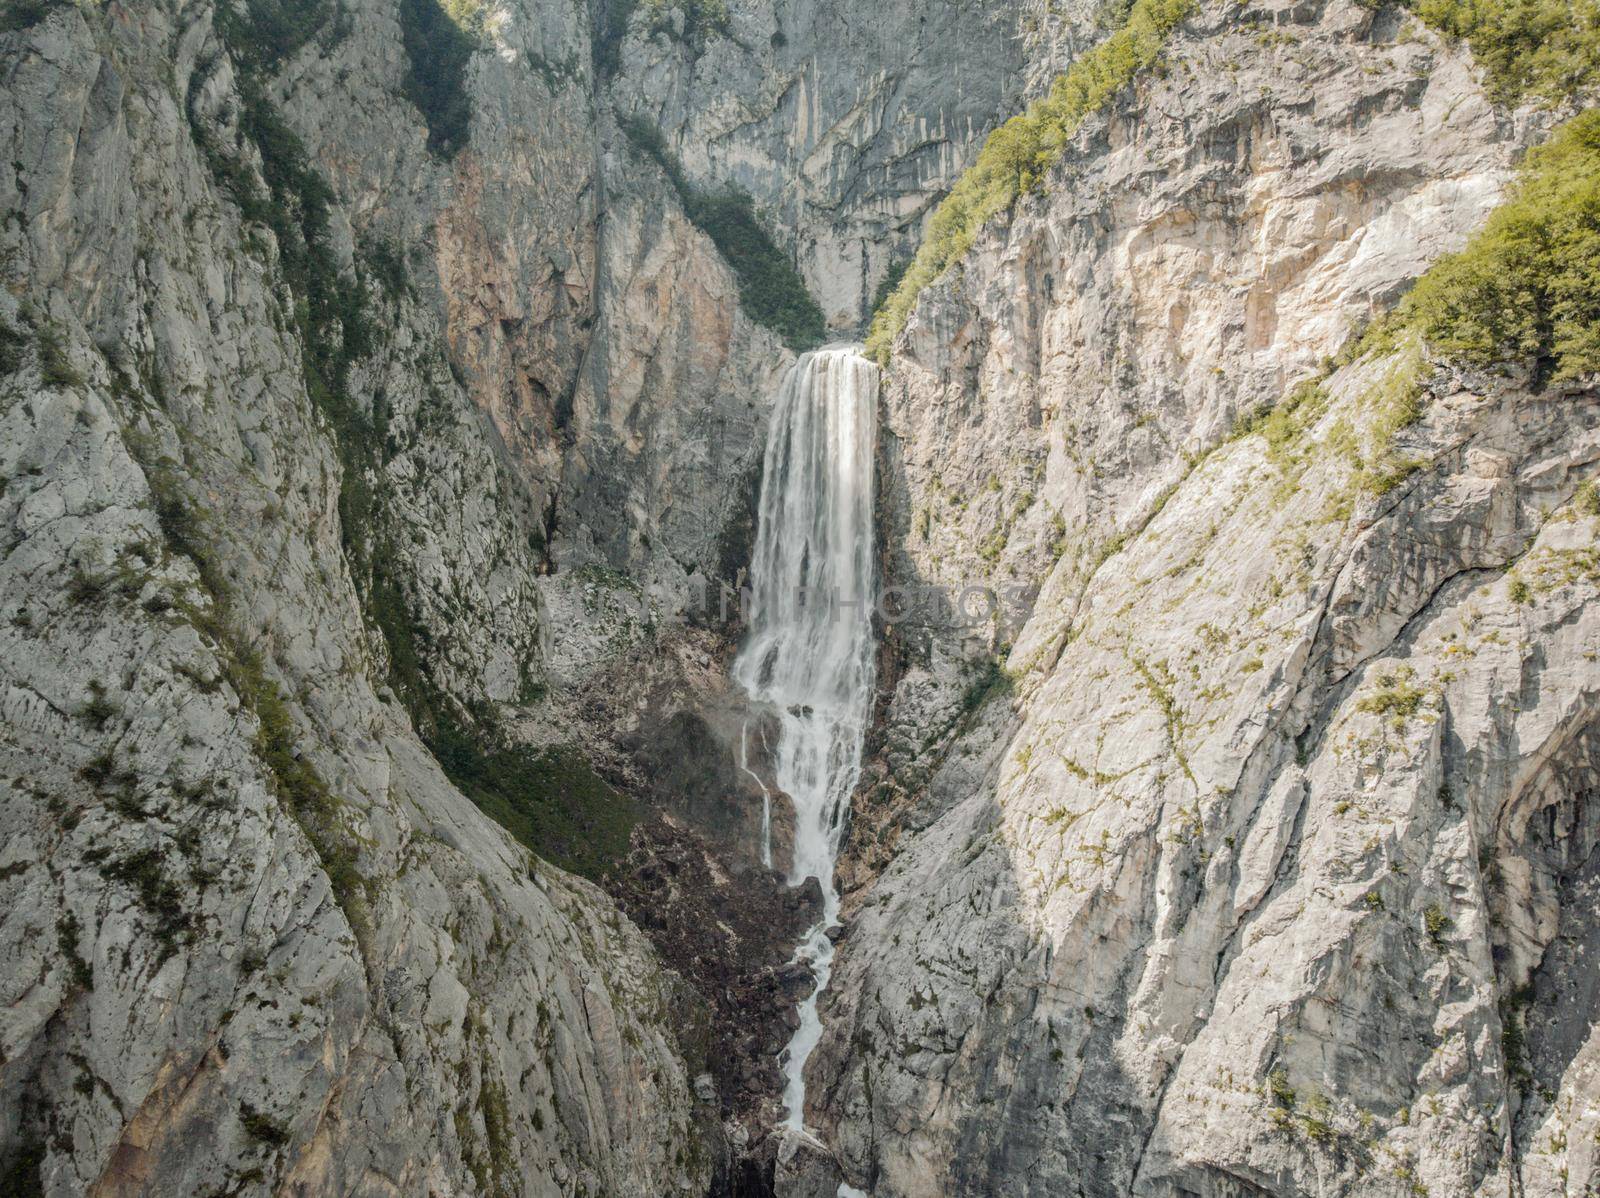 Famous slovenian waterfall Boka in Julian Alps in Triglav National park. One of the highest in Slovenia. Slap Boka.